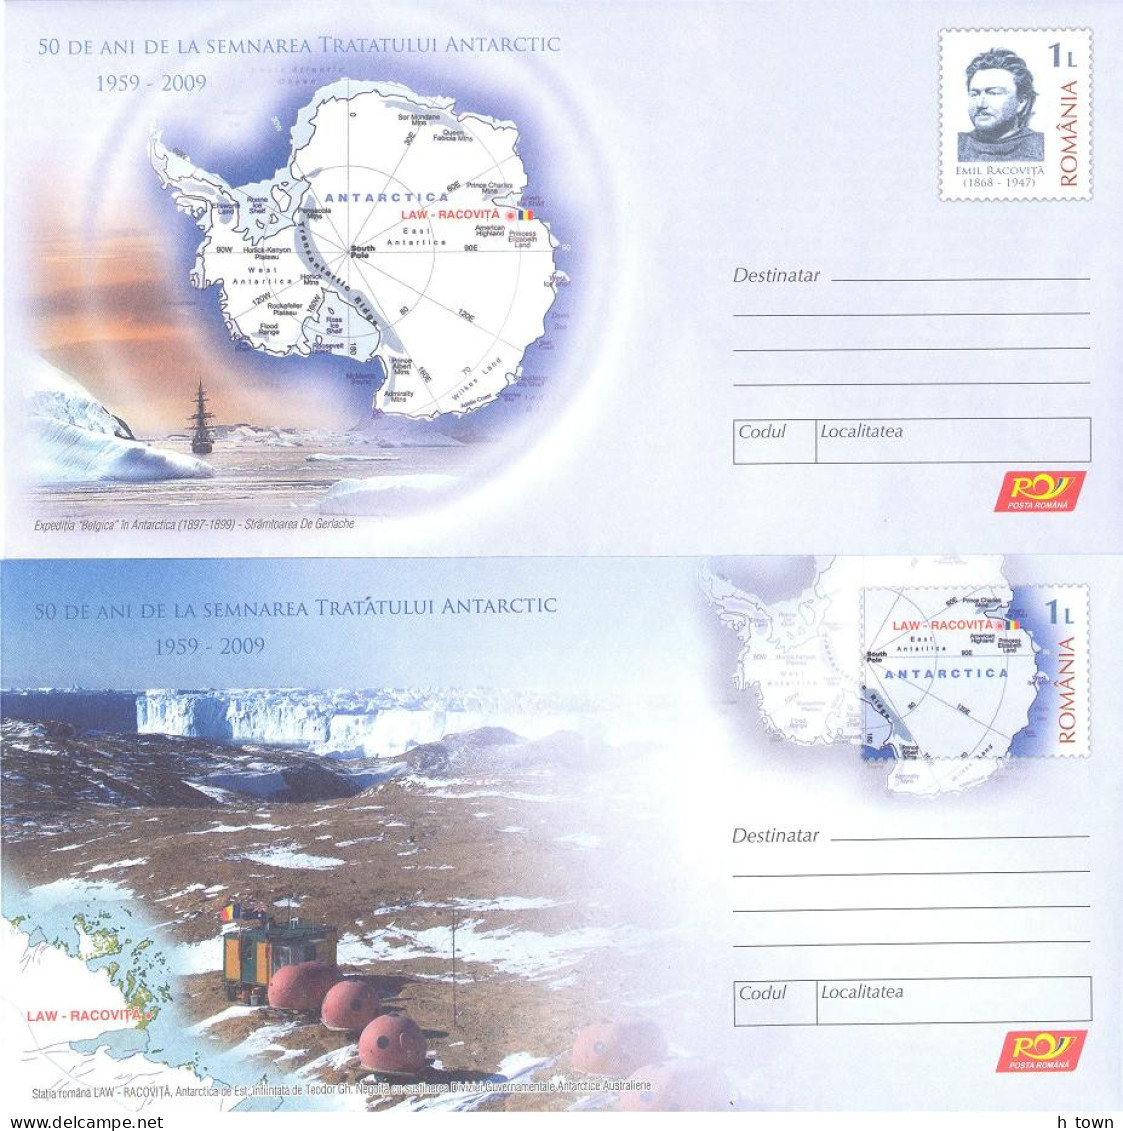 229  Traité Sur L'Antarctique: 2 PAP, 2009 - Antarctic Treaty, Map: 2 Postal Stationery Covers From Romania - Antarktisvertrag